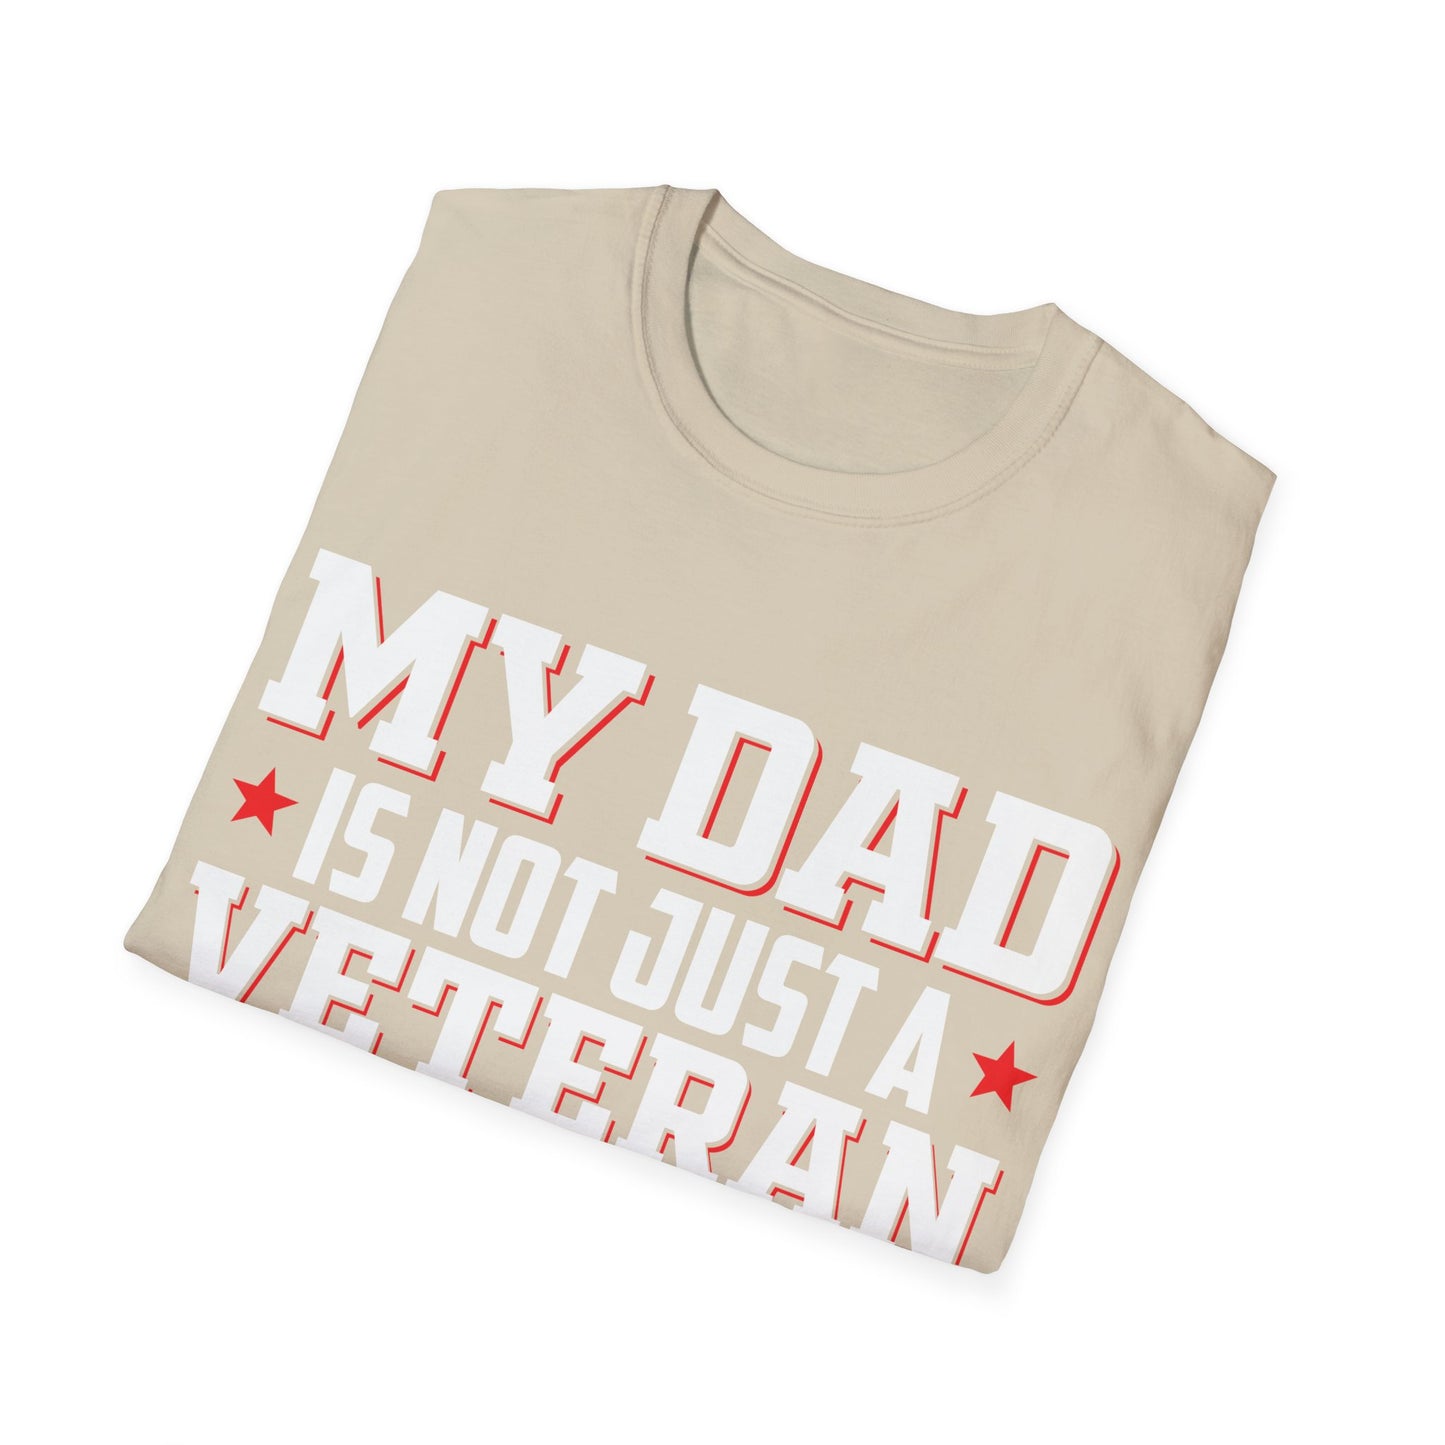 My Dad Hero - Unisex Softstyle T-Shirt